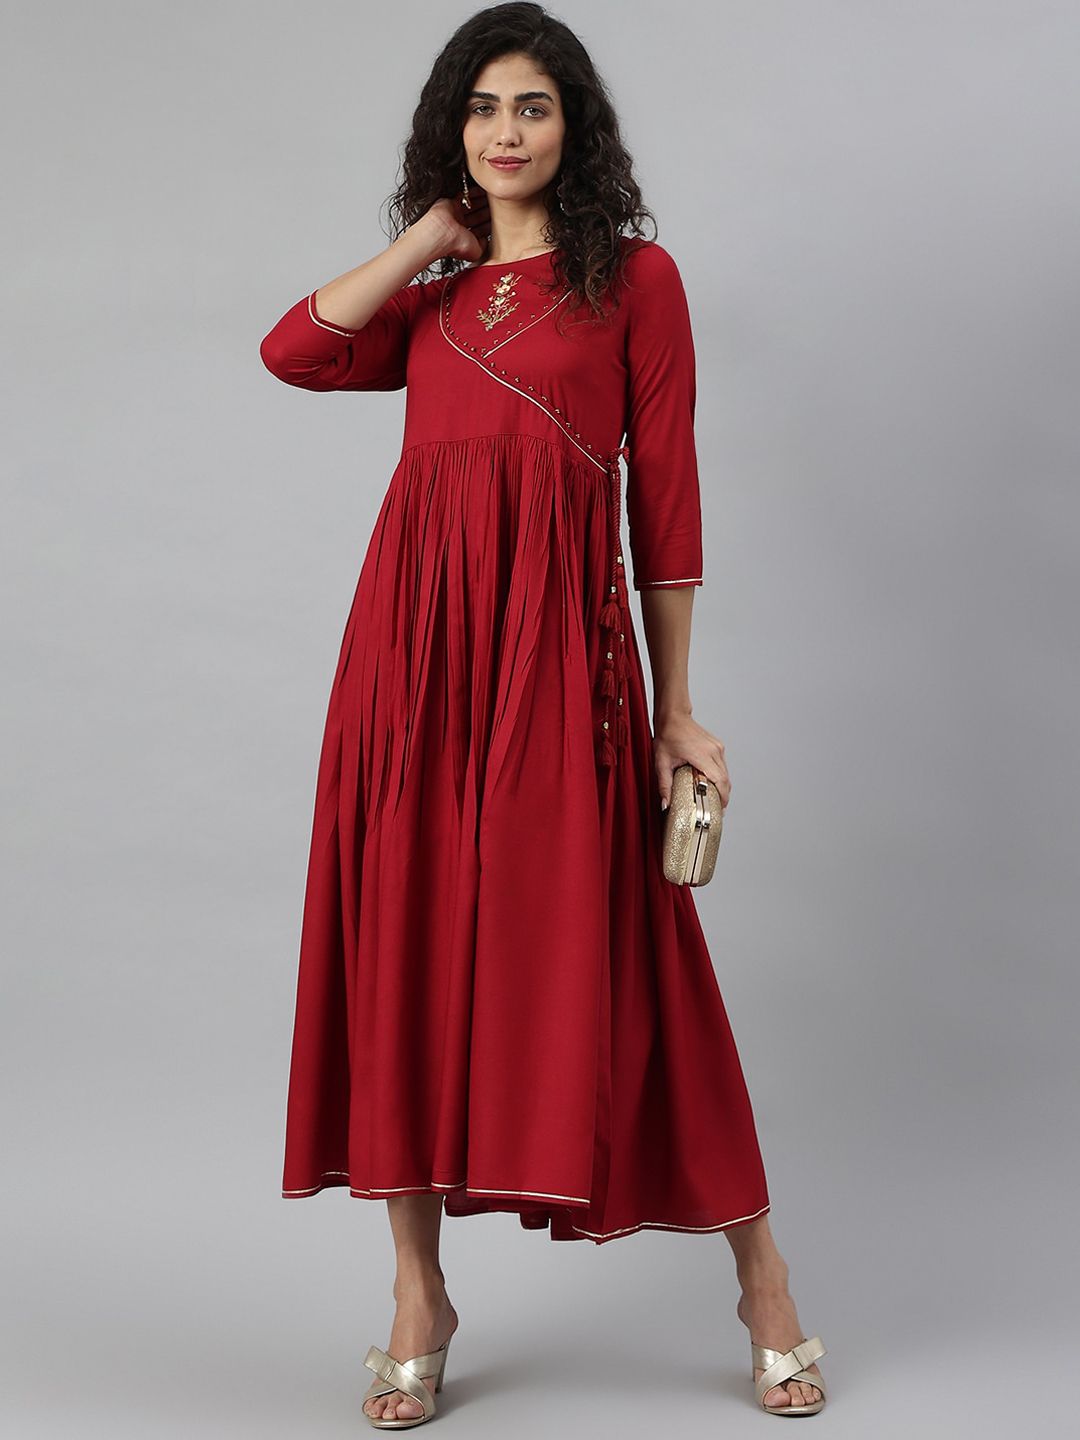 KALINI Red Embroidered Ethnic Wrap Midi Dress Price in India